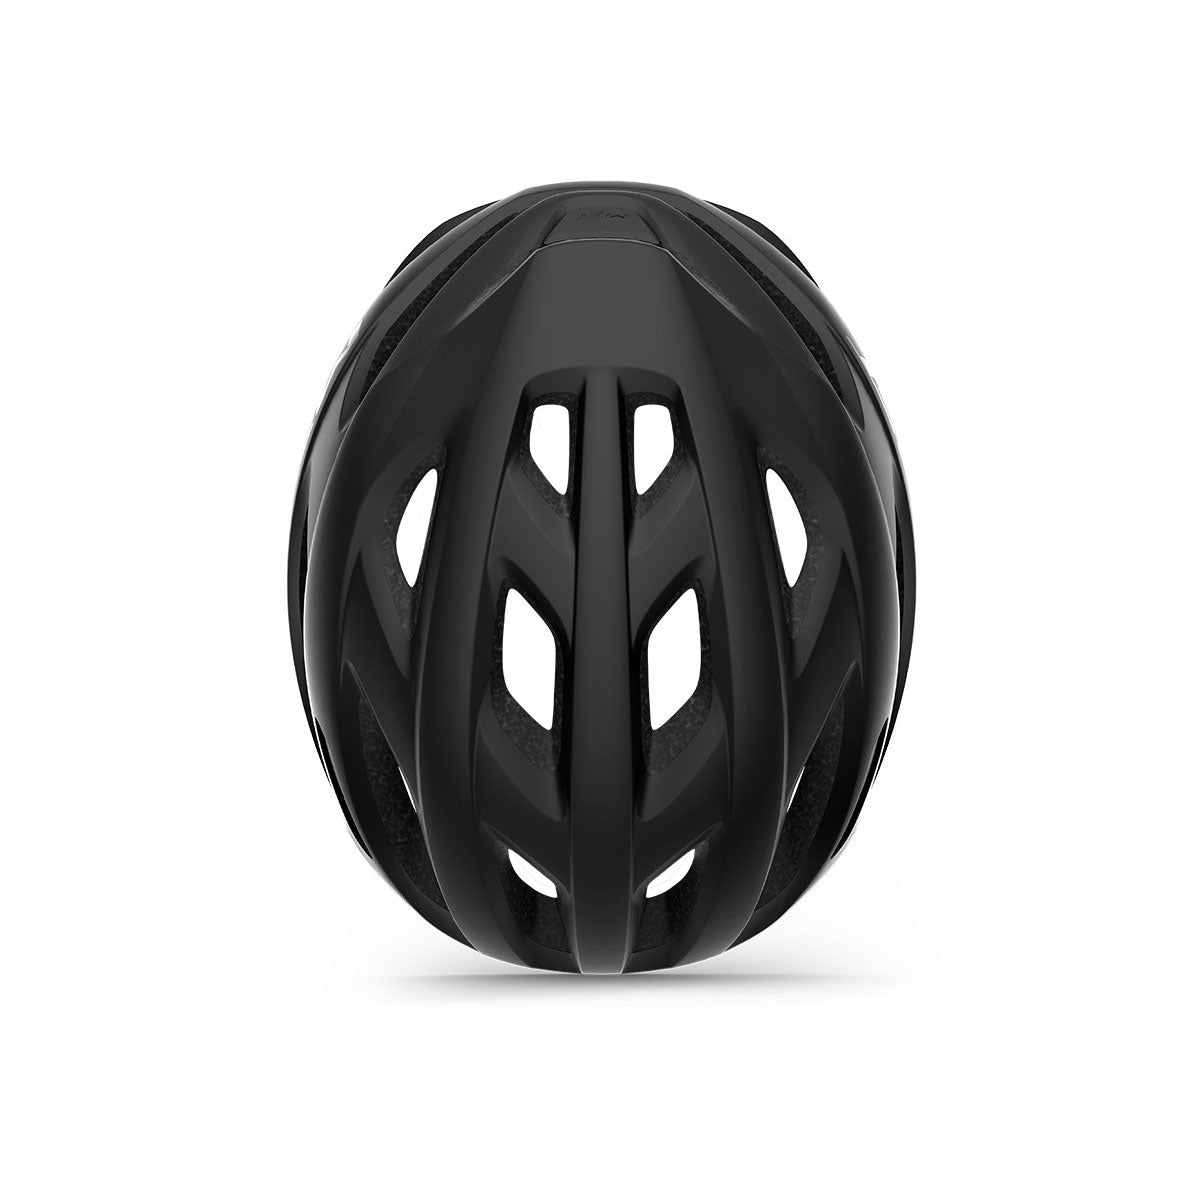 Idolo Road Helmet